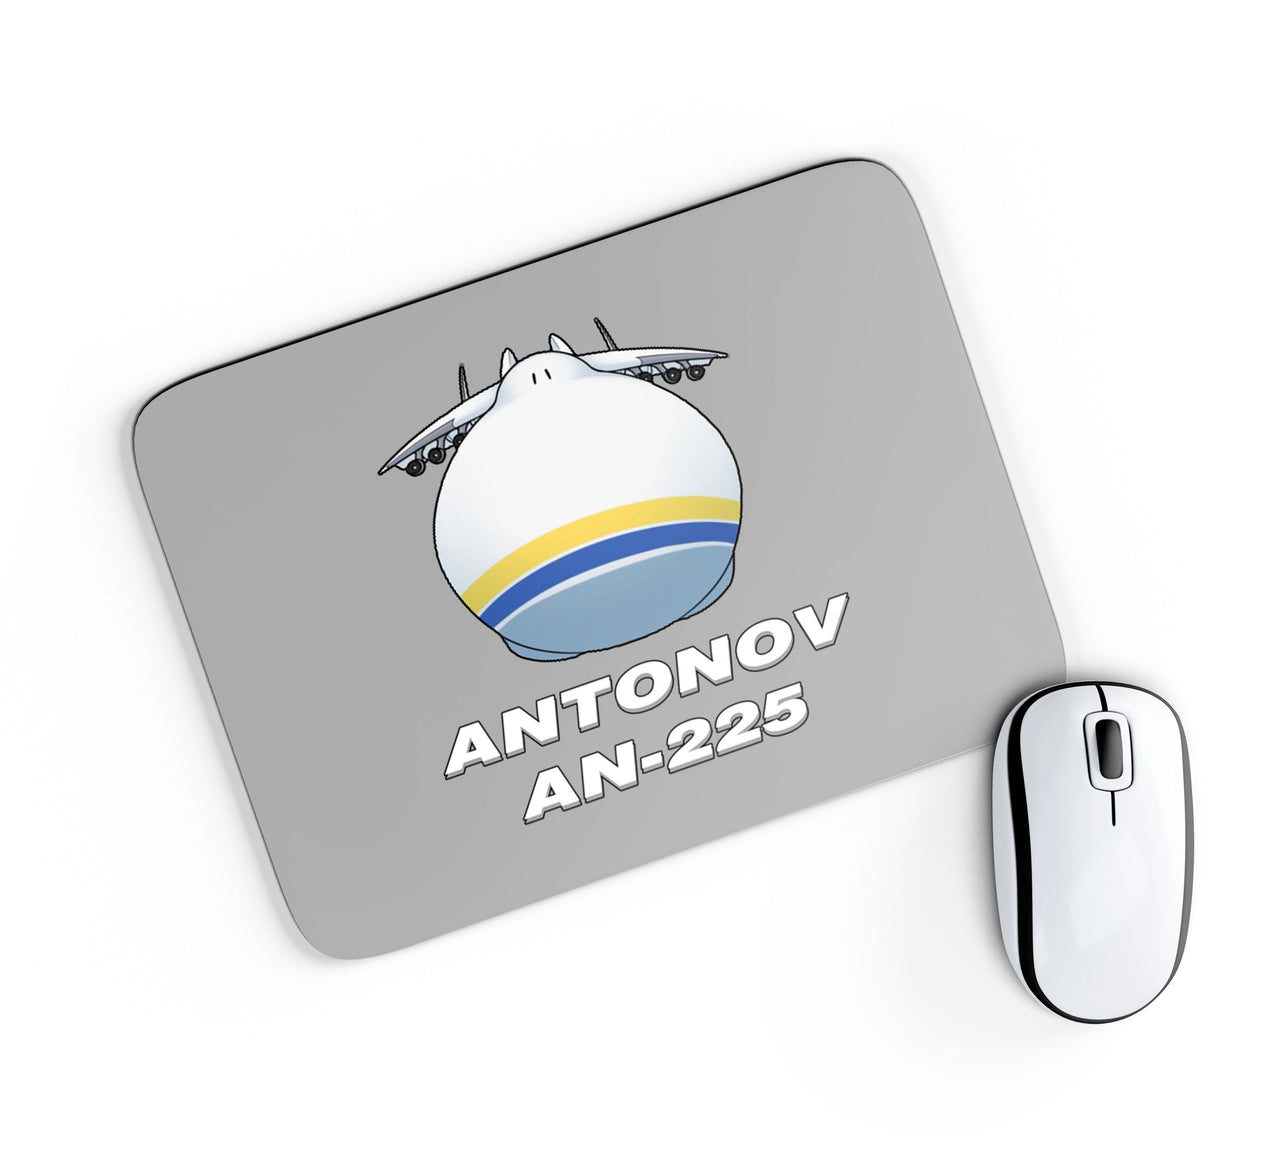 Antonov AN-225 (20) Designed Mouse Pads